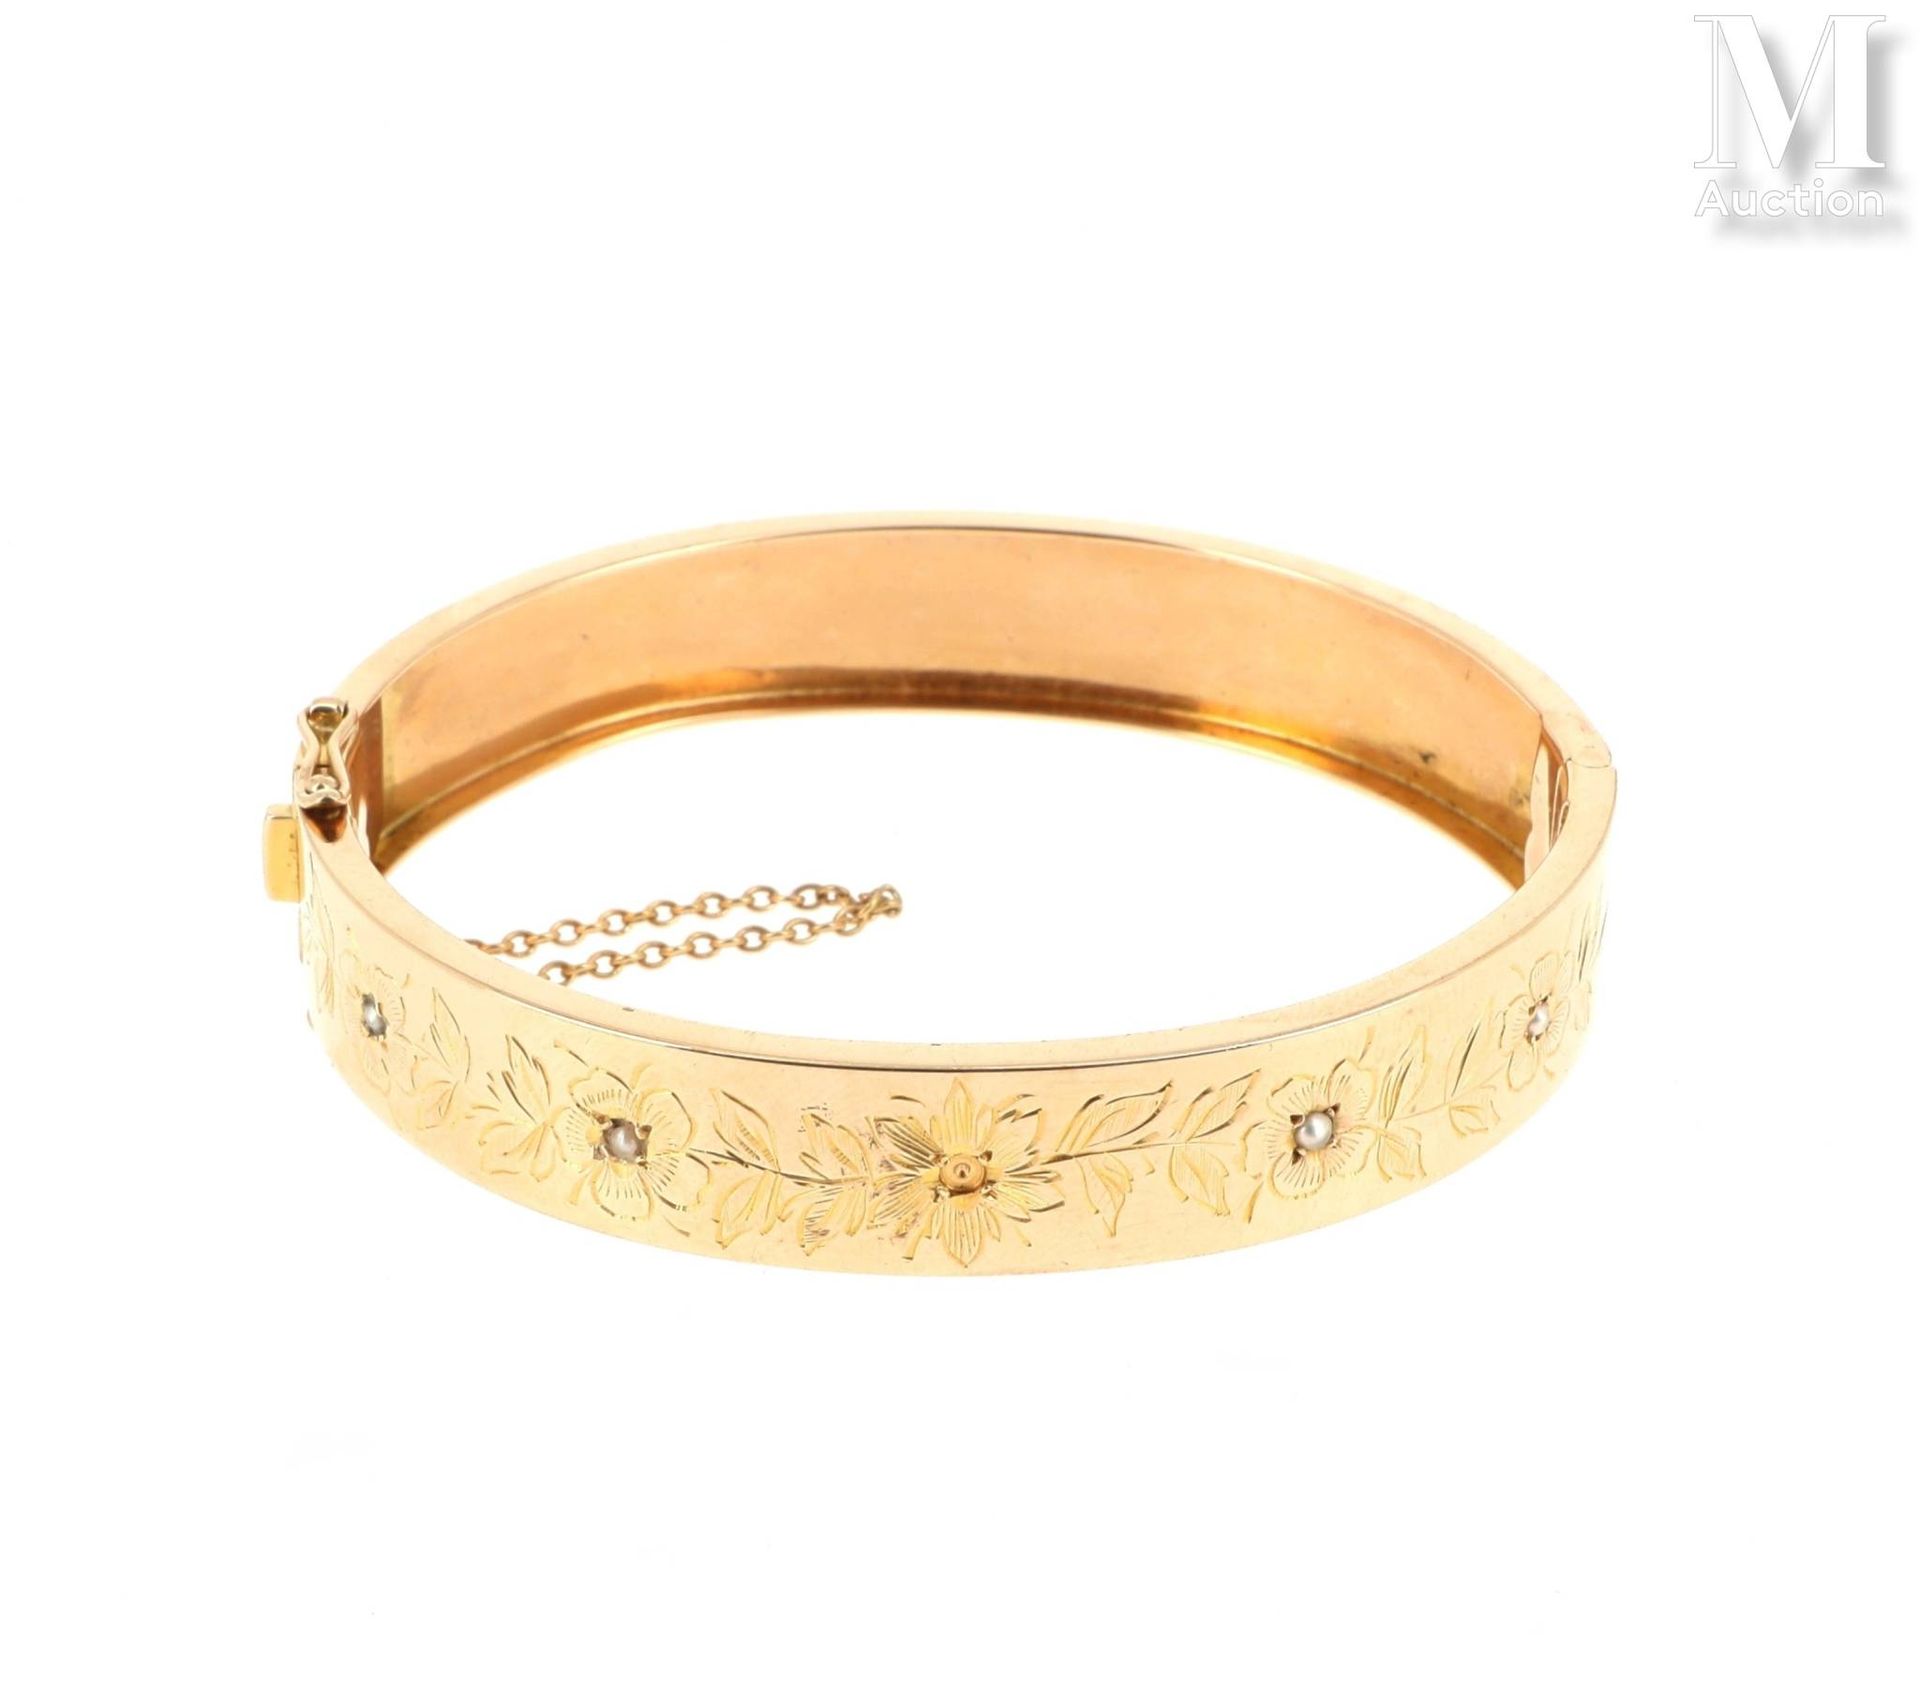 Bracelet jonc 18K（750°/°）黄金椭圆手镯，凿刻花纹卷轴装饰，镶嵌小珍珠（缺失）；铰链式侧开，棘轮扣，带八字和安全链。

毛重：19,1克。&hellip;